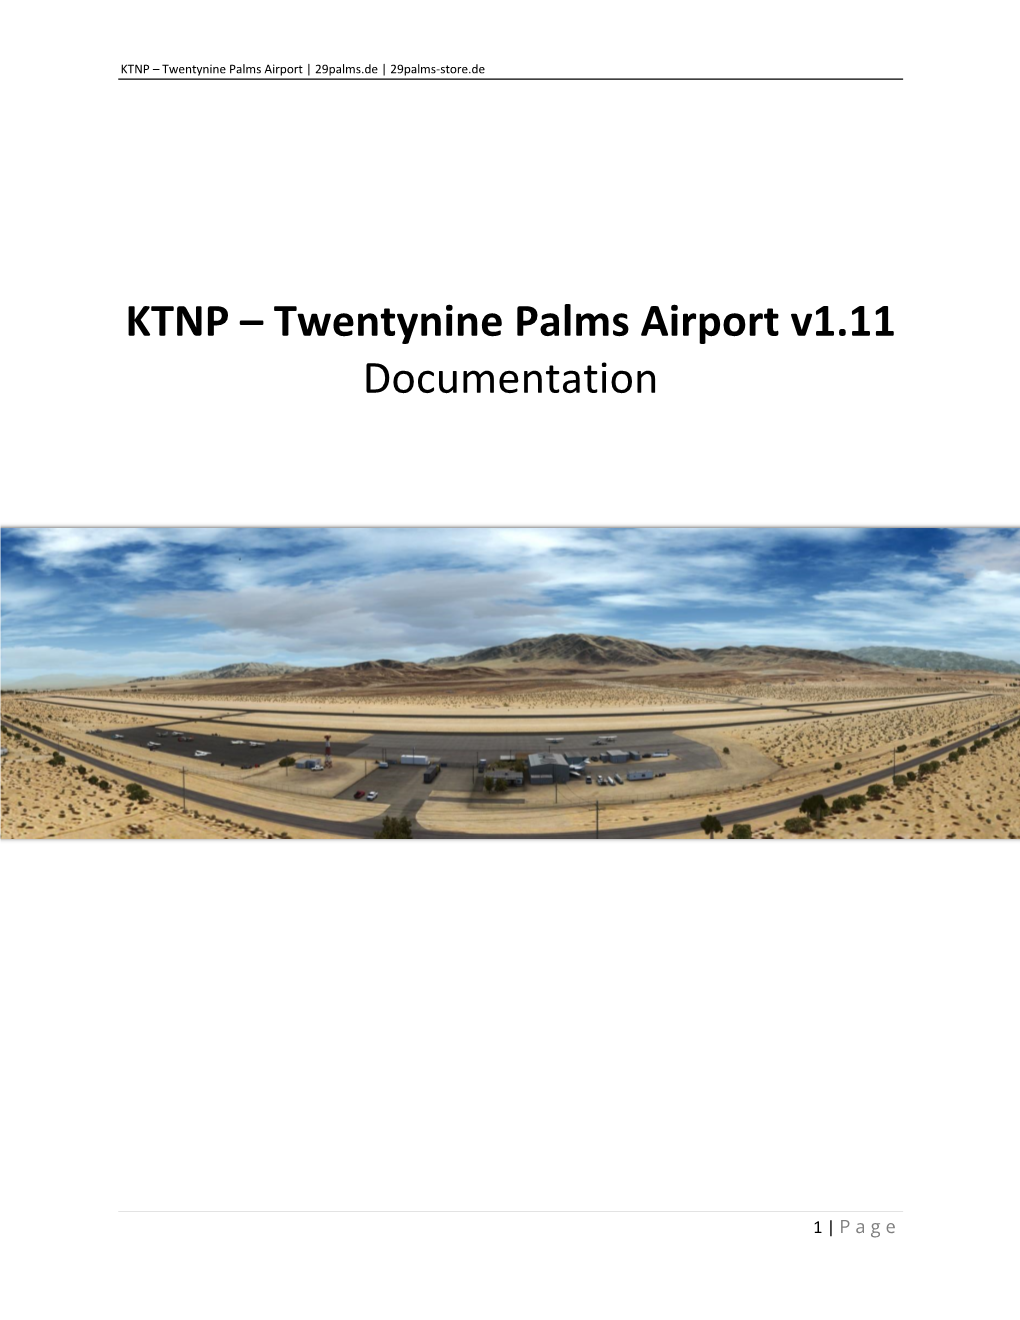 KTNP – Twentynine Palms Airport V1.11 Documentation